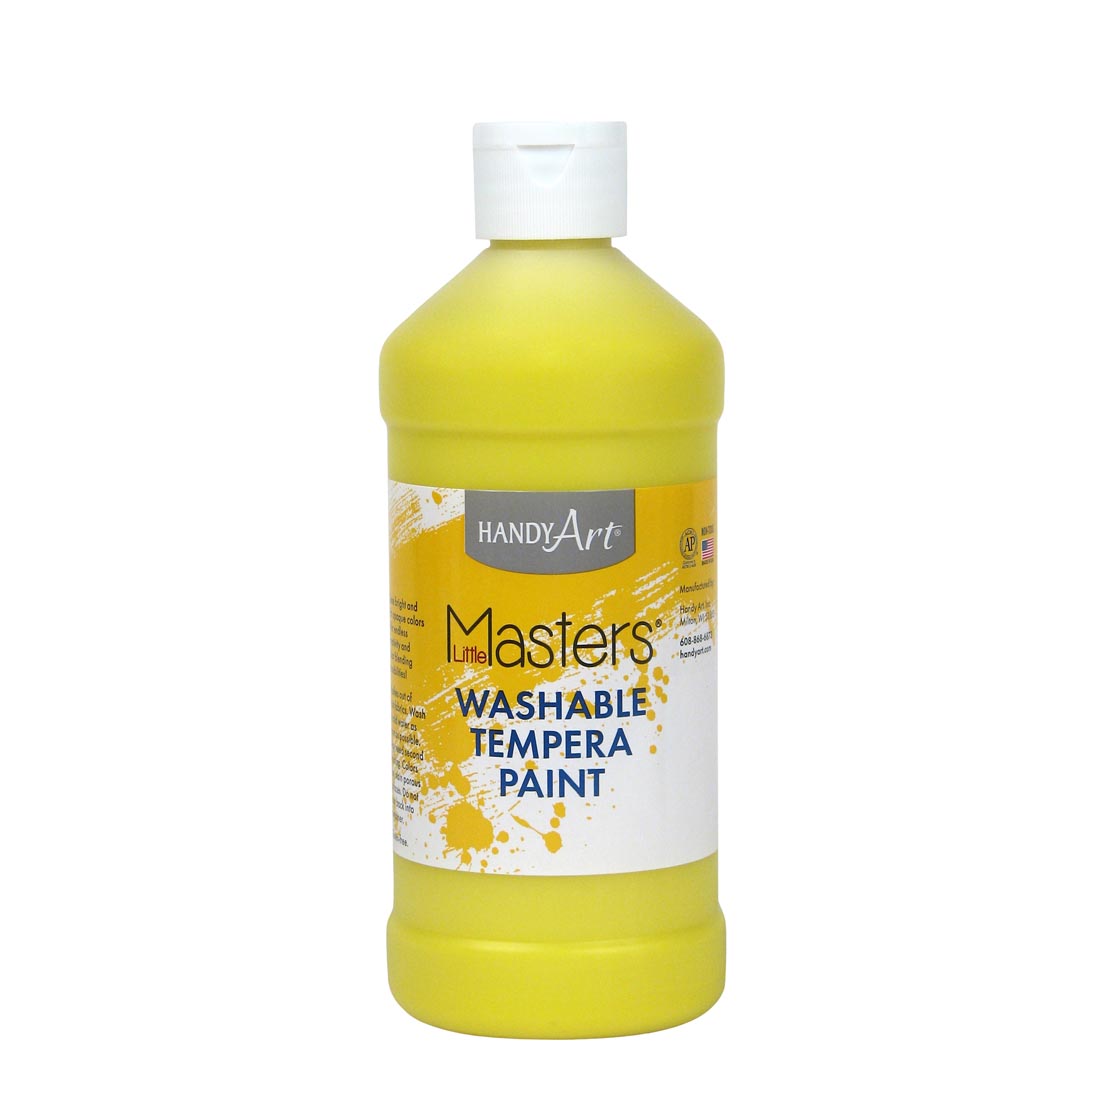 Pint bottle of Yellow Handy Art Little Masters Washable Tempera Paint